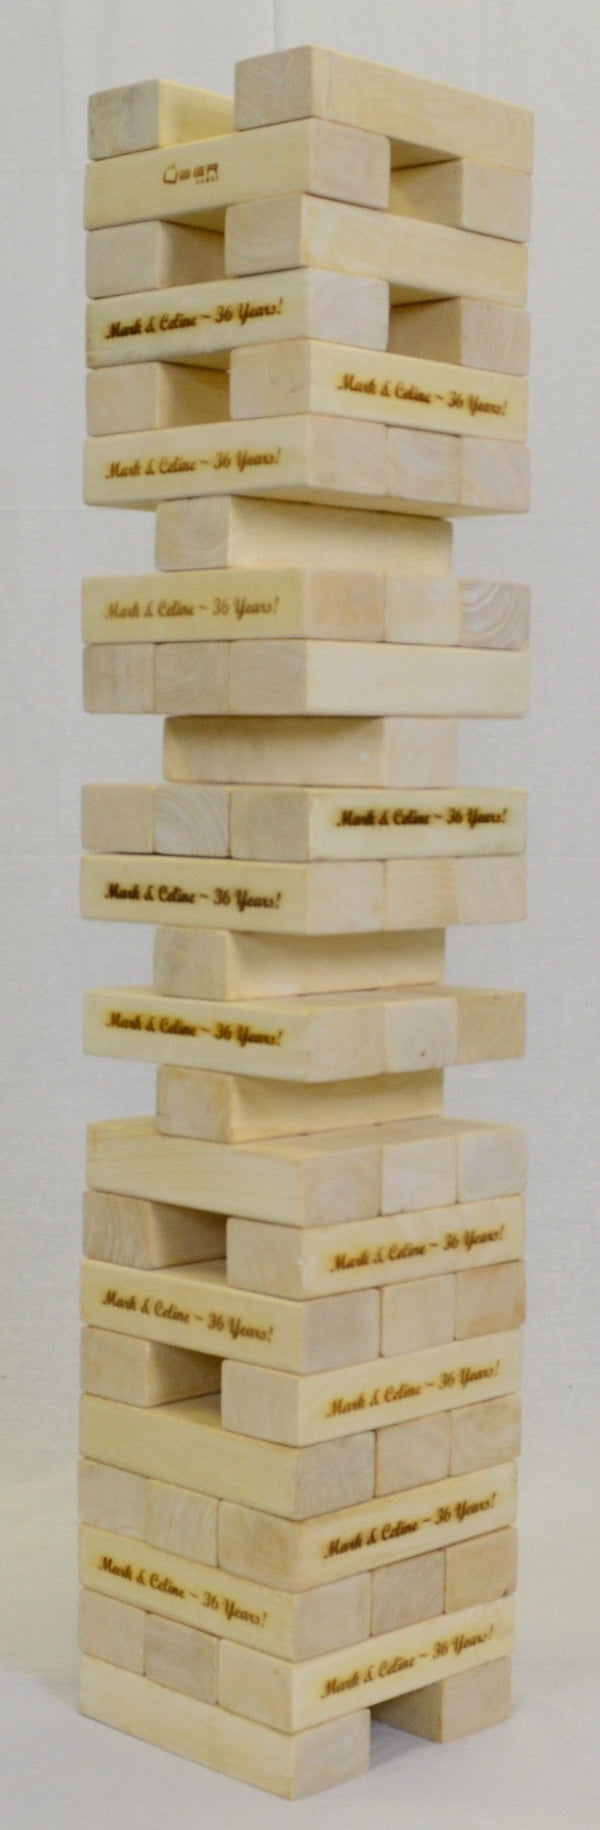 Customized Mega Tumble Tower Hardwood | 14 Blocks | MegaChess.com